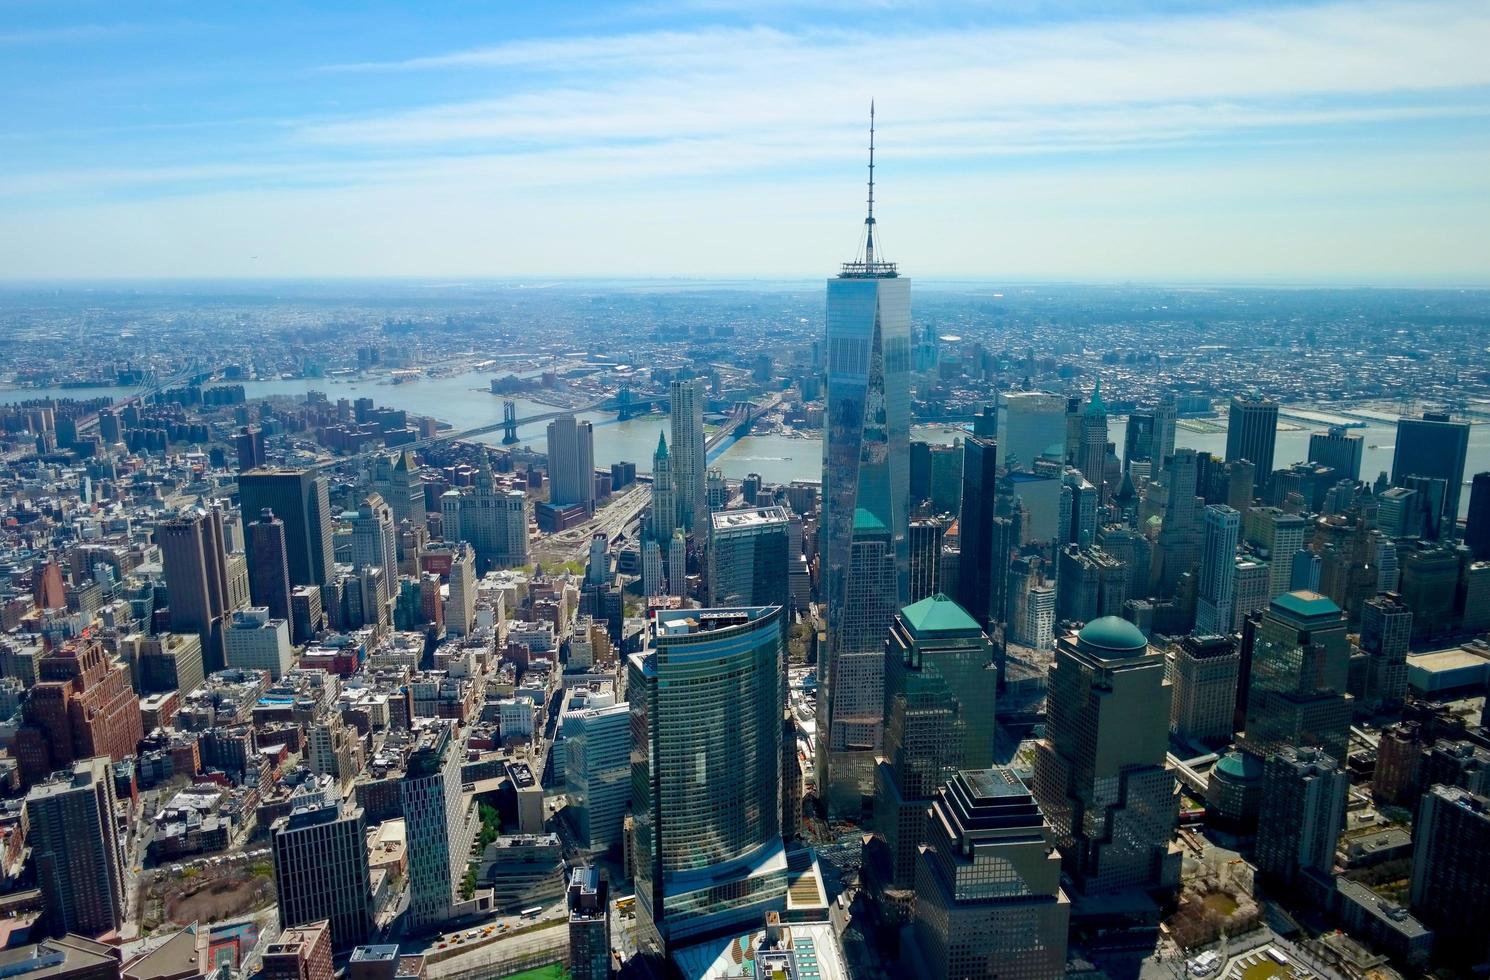 New York City, NY, 2020 - Aerial view of the New York Skyline photo